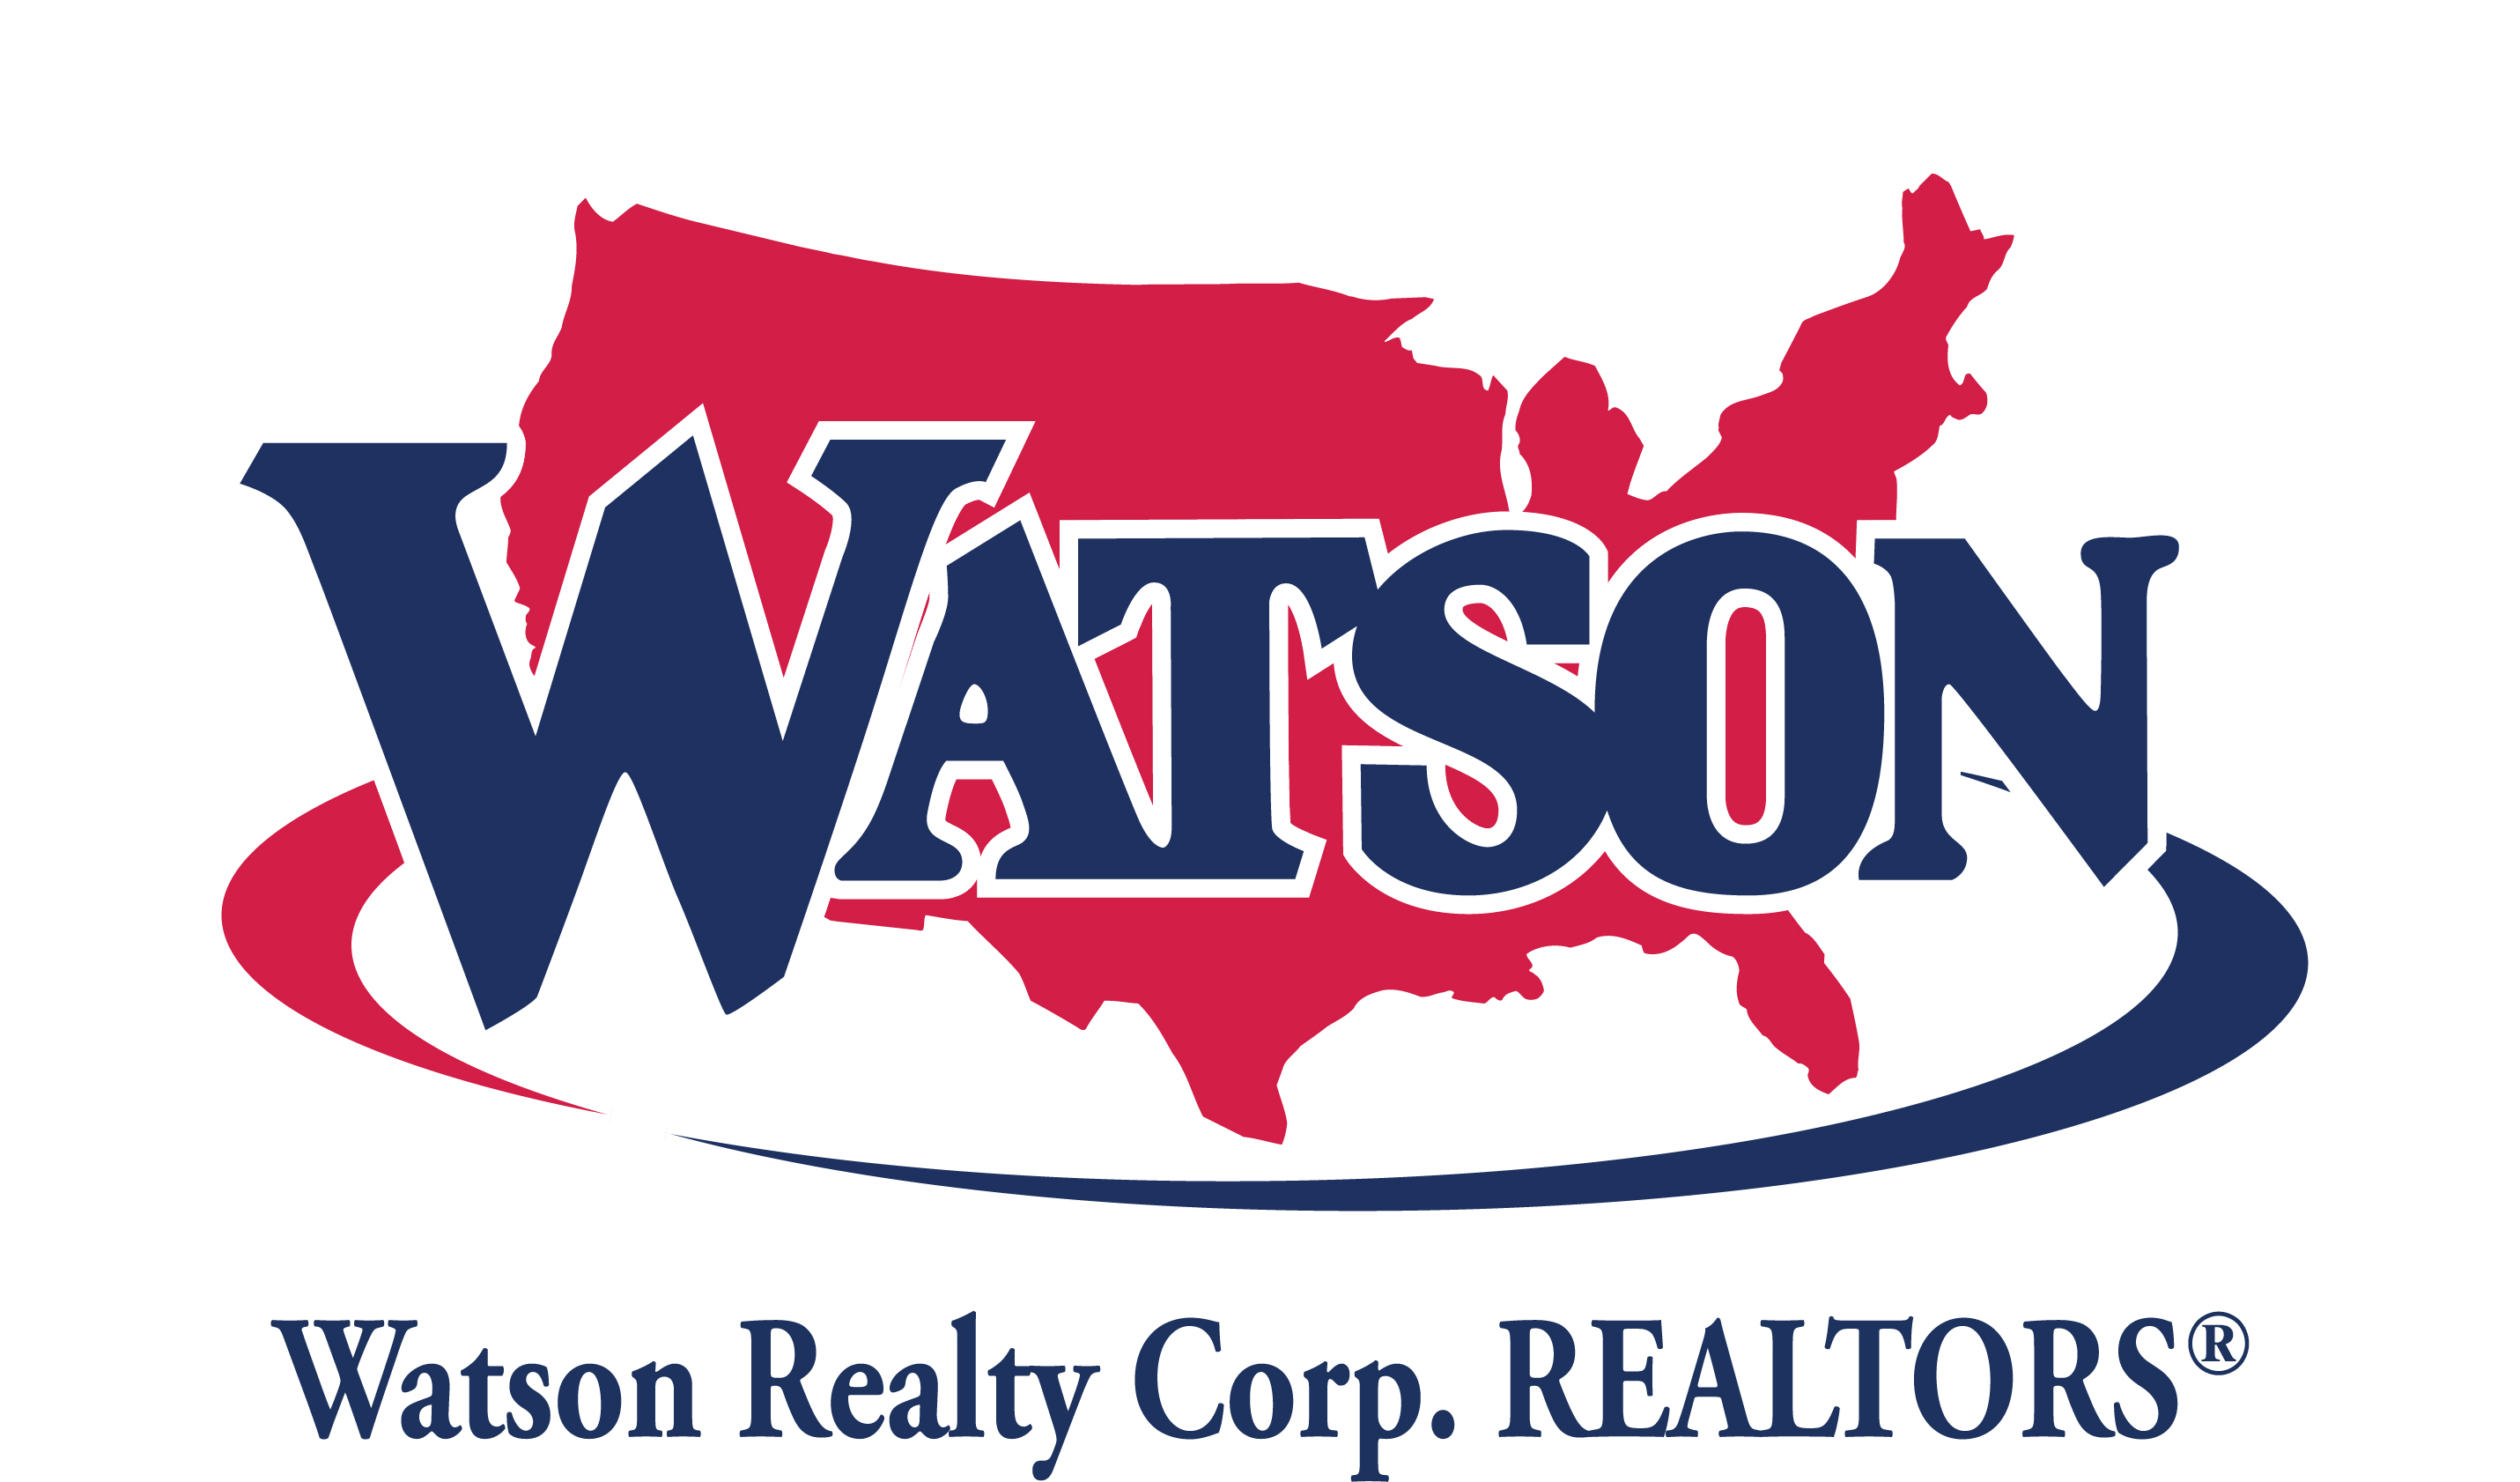 Watson Realty Corp. logo